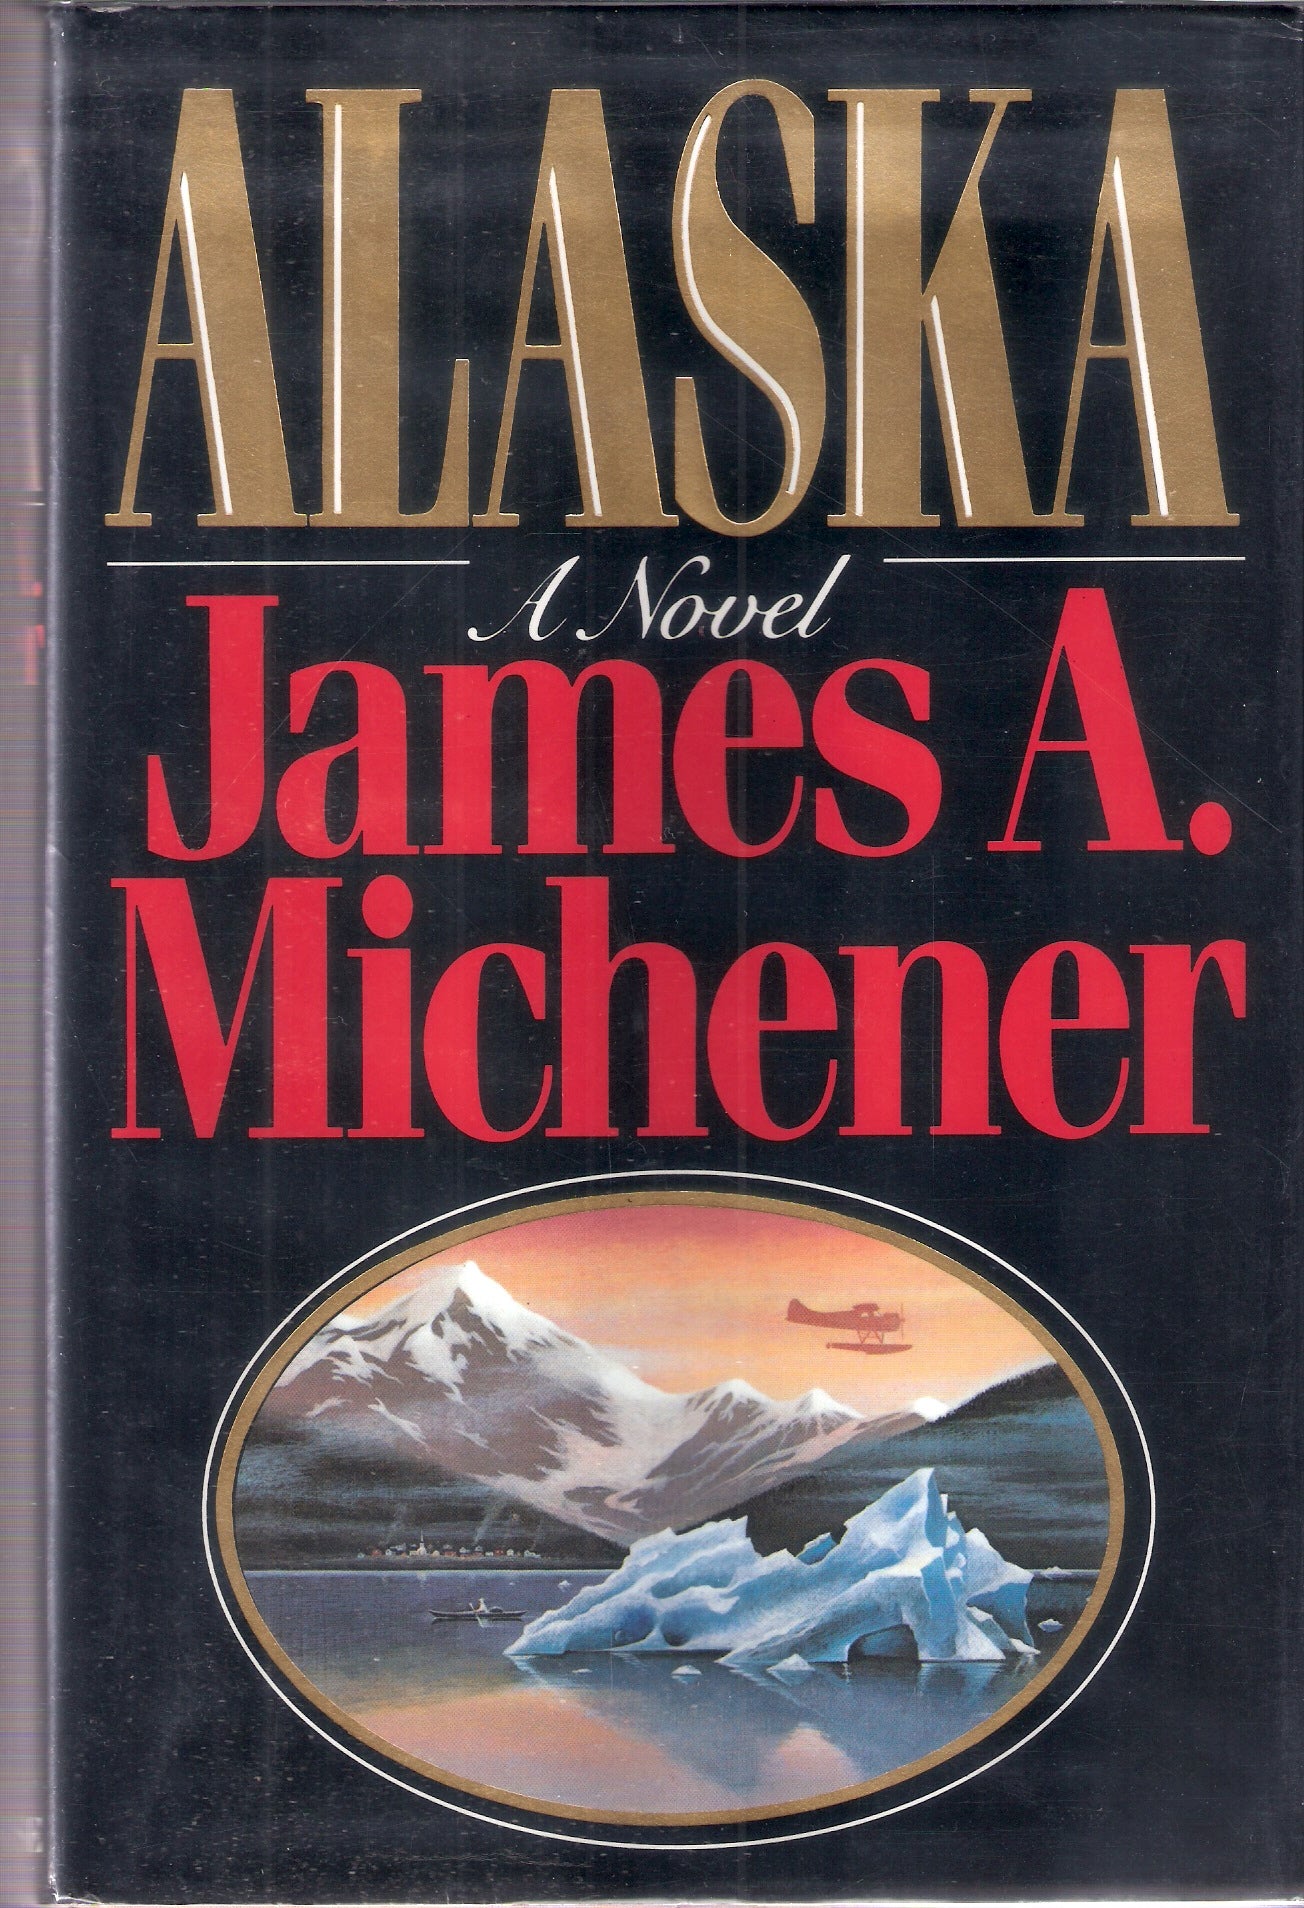 Cover art for the book Alaska